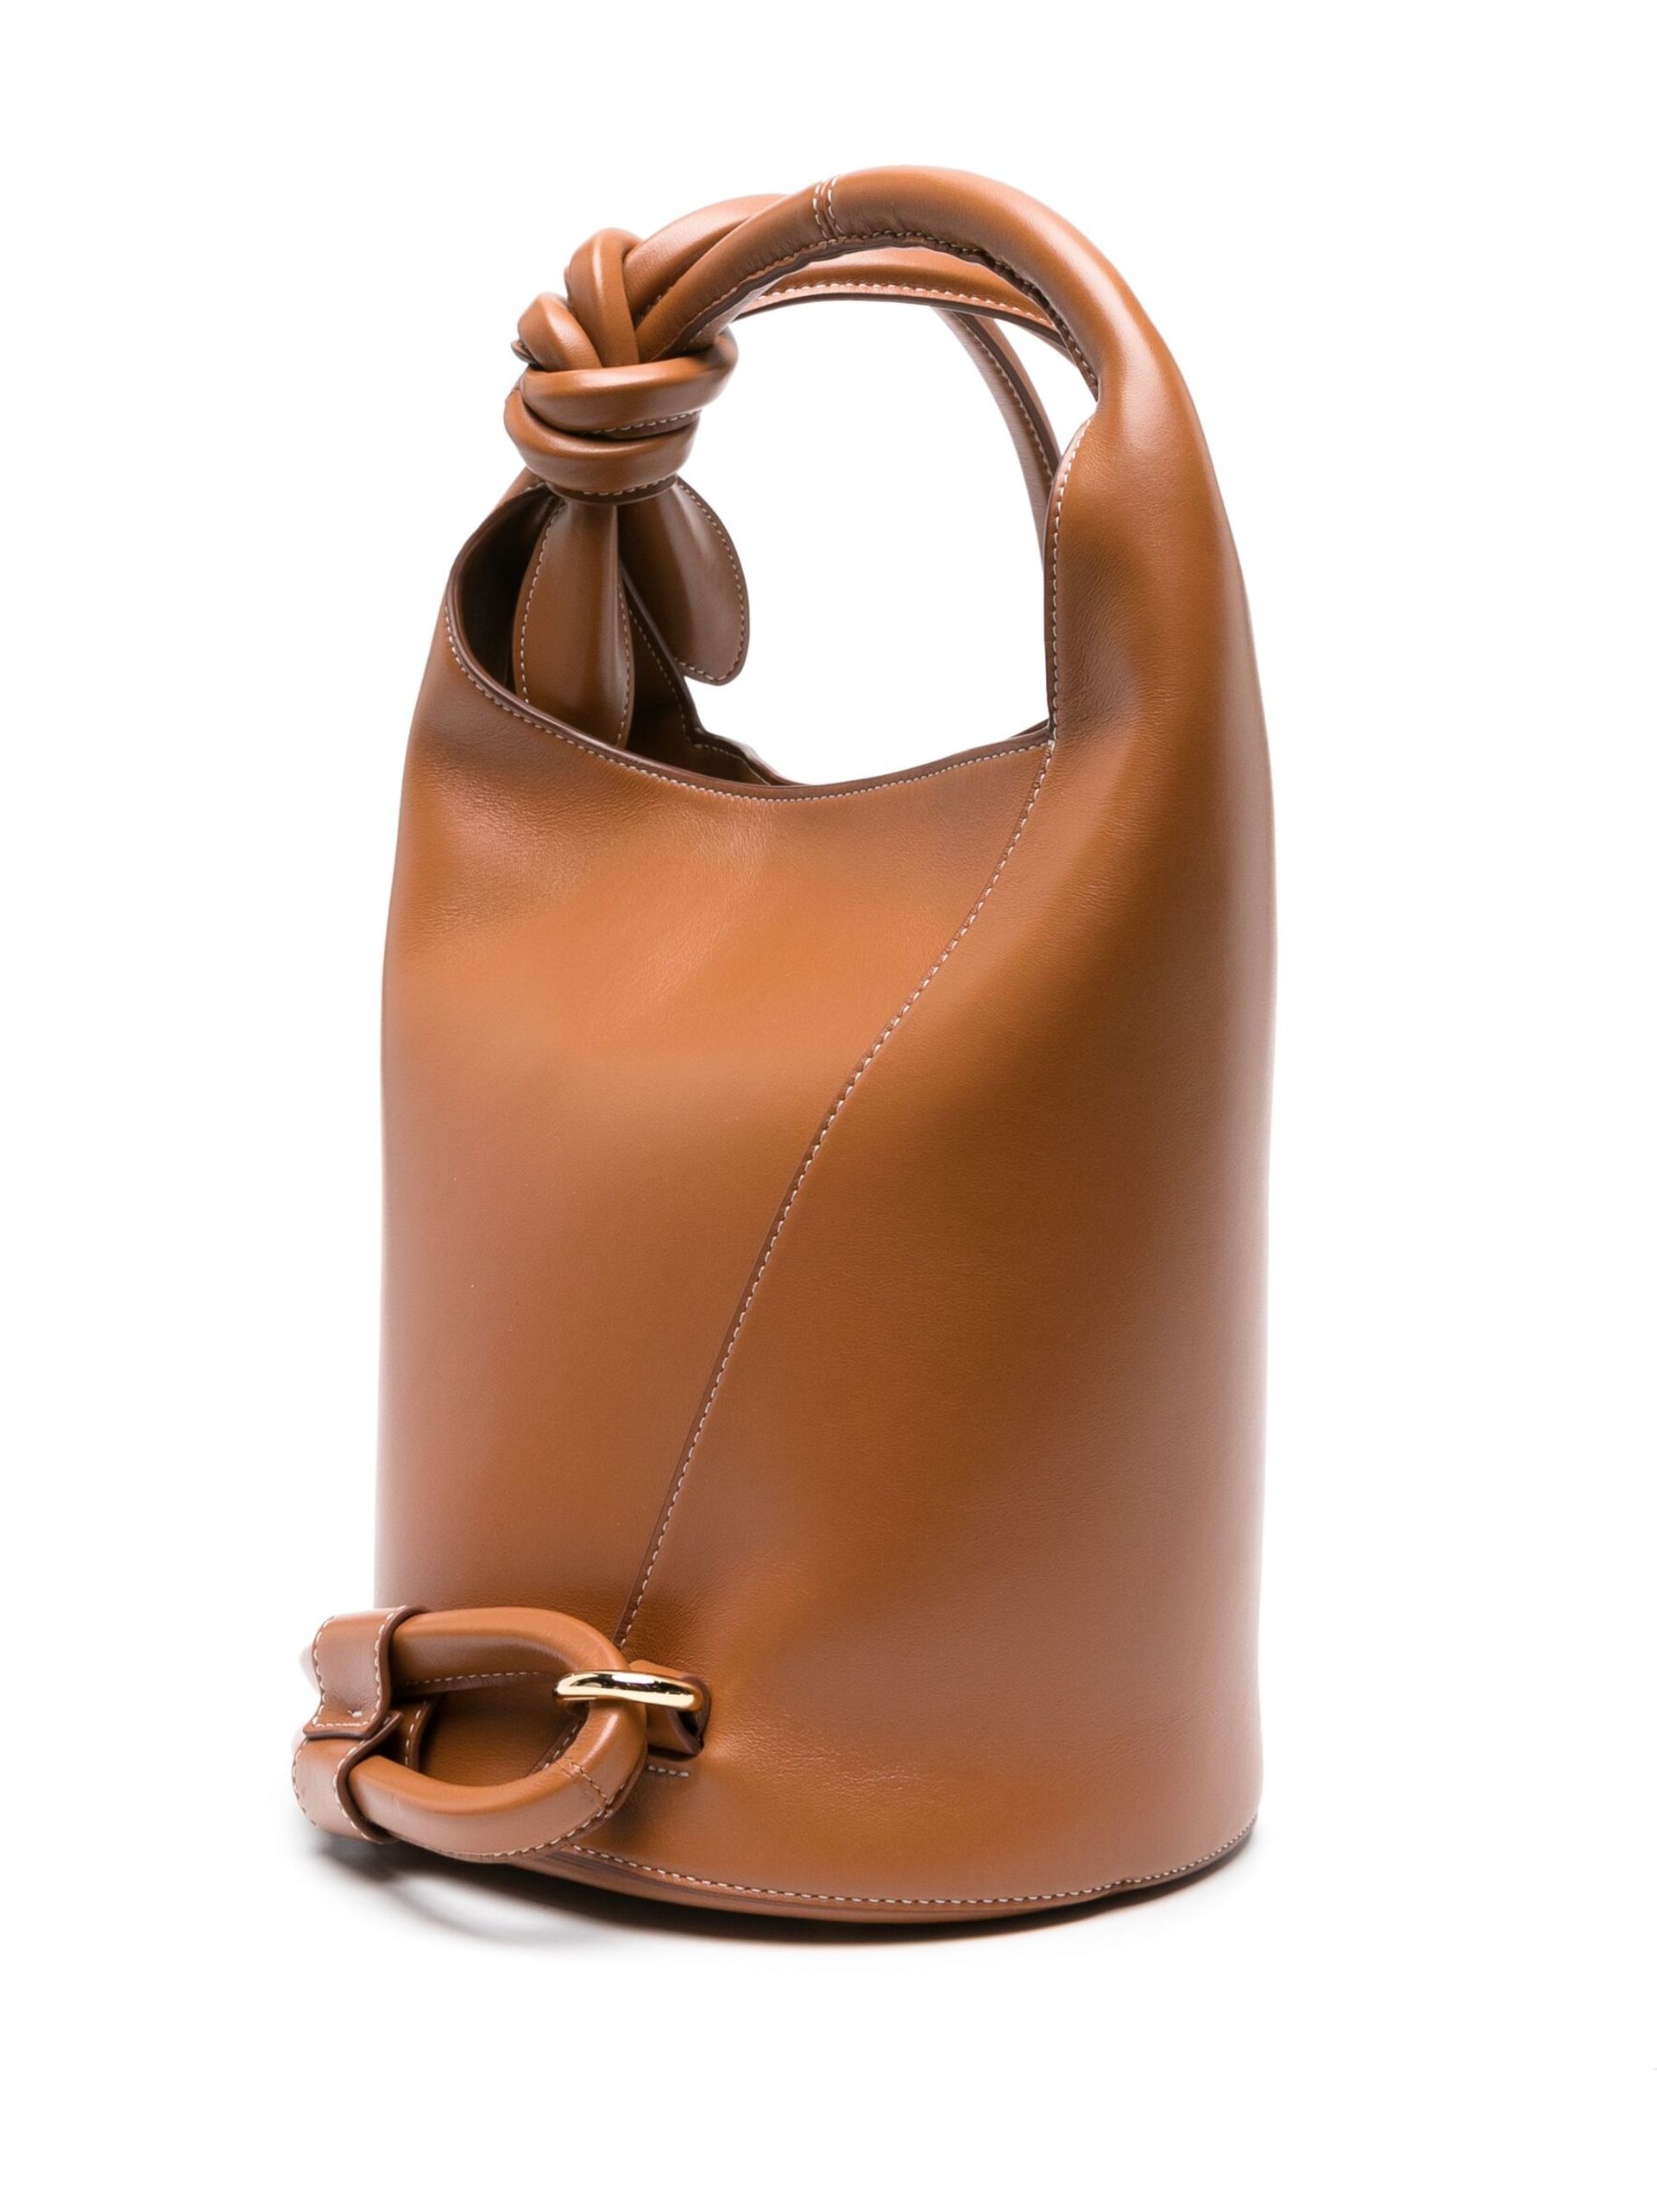 brown Le petit Tourni leather bucket bag. - 4